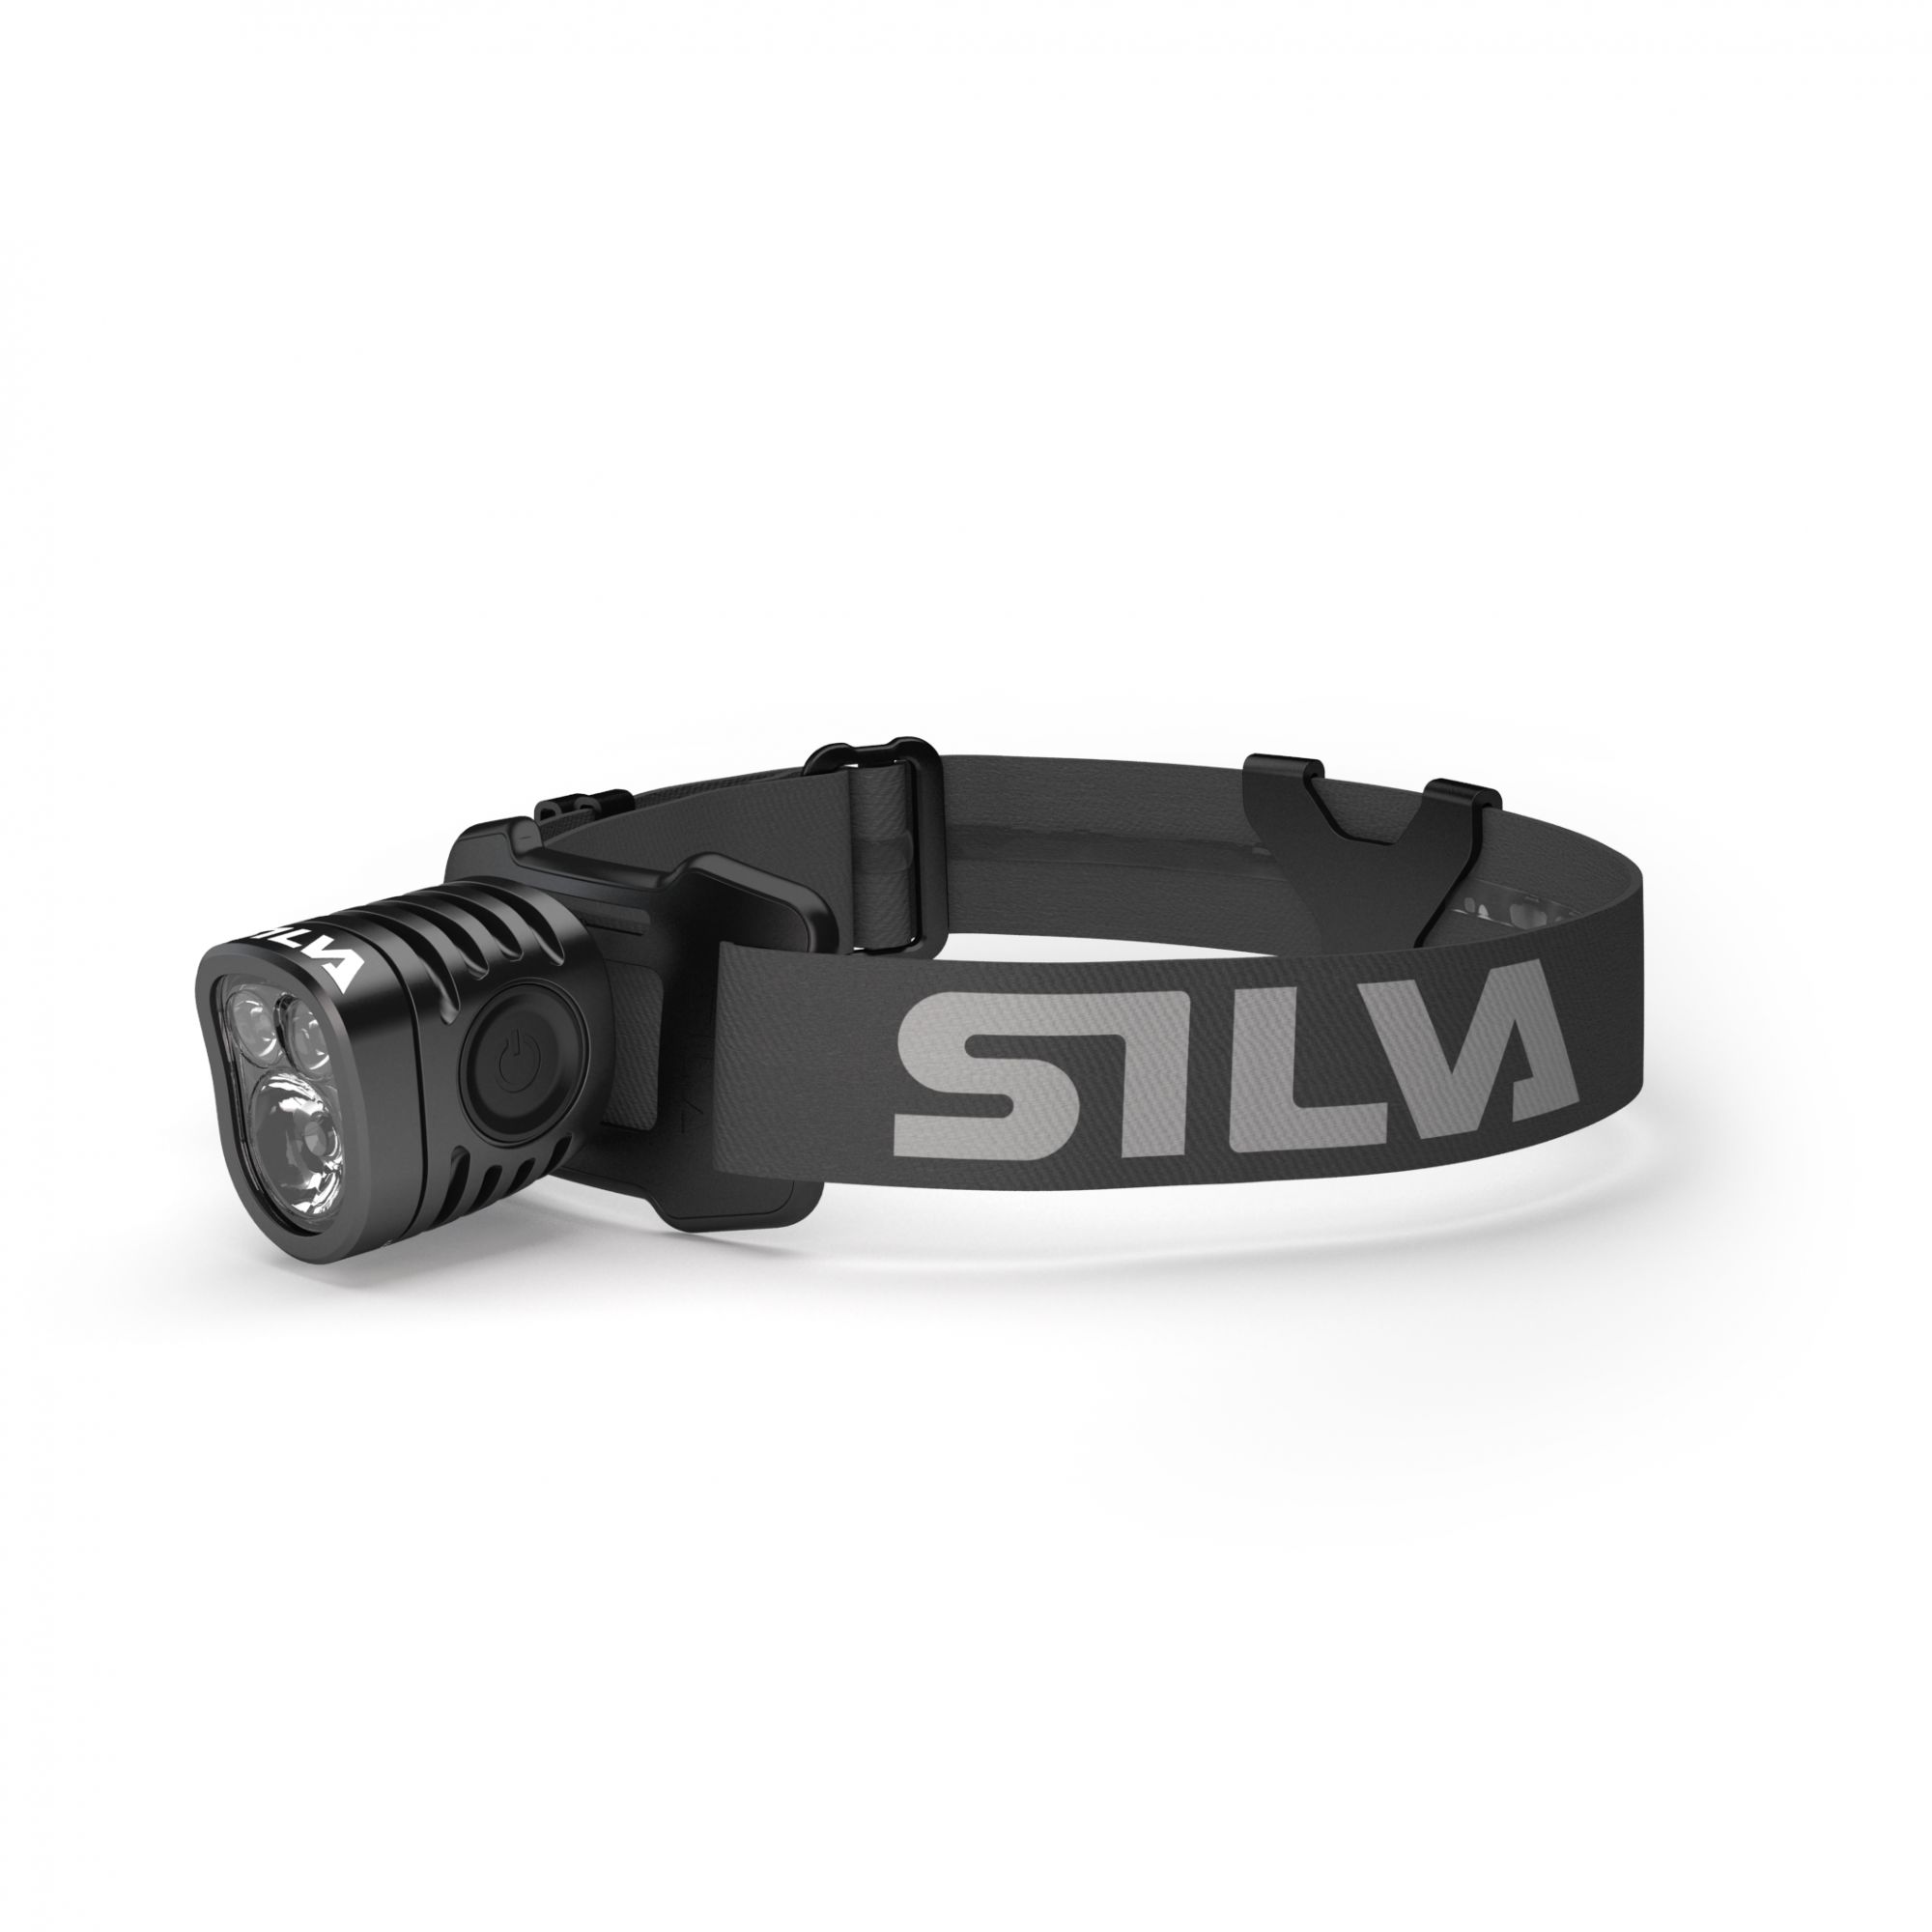 Silva Exceed 4X Schwarz- Stirnlampen- Grsse One Size - Farbe Black